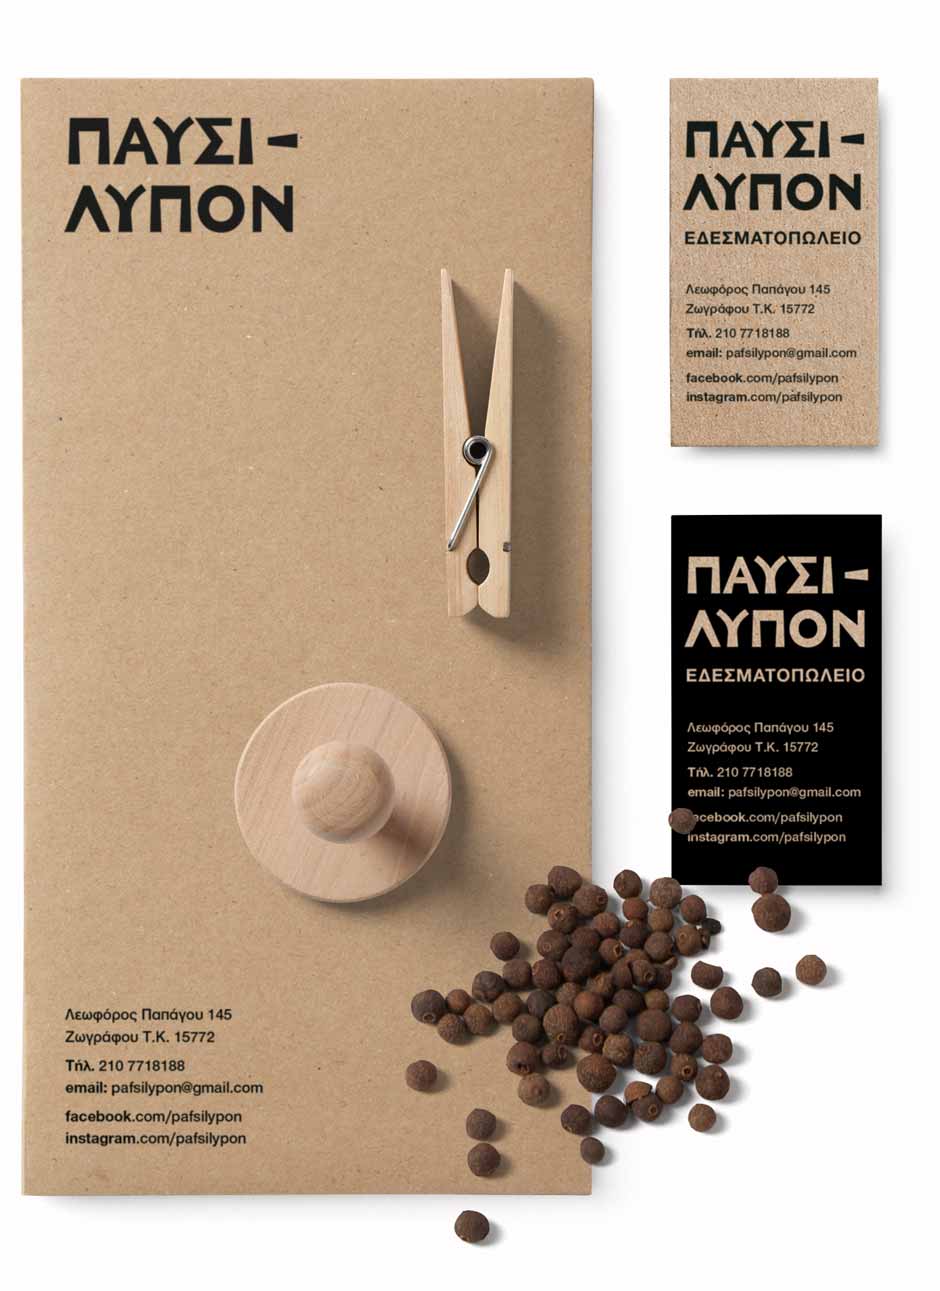 Greek Reastaurant Menu Graphic Design. NO IDEA. Branding Graphic Design Agency